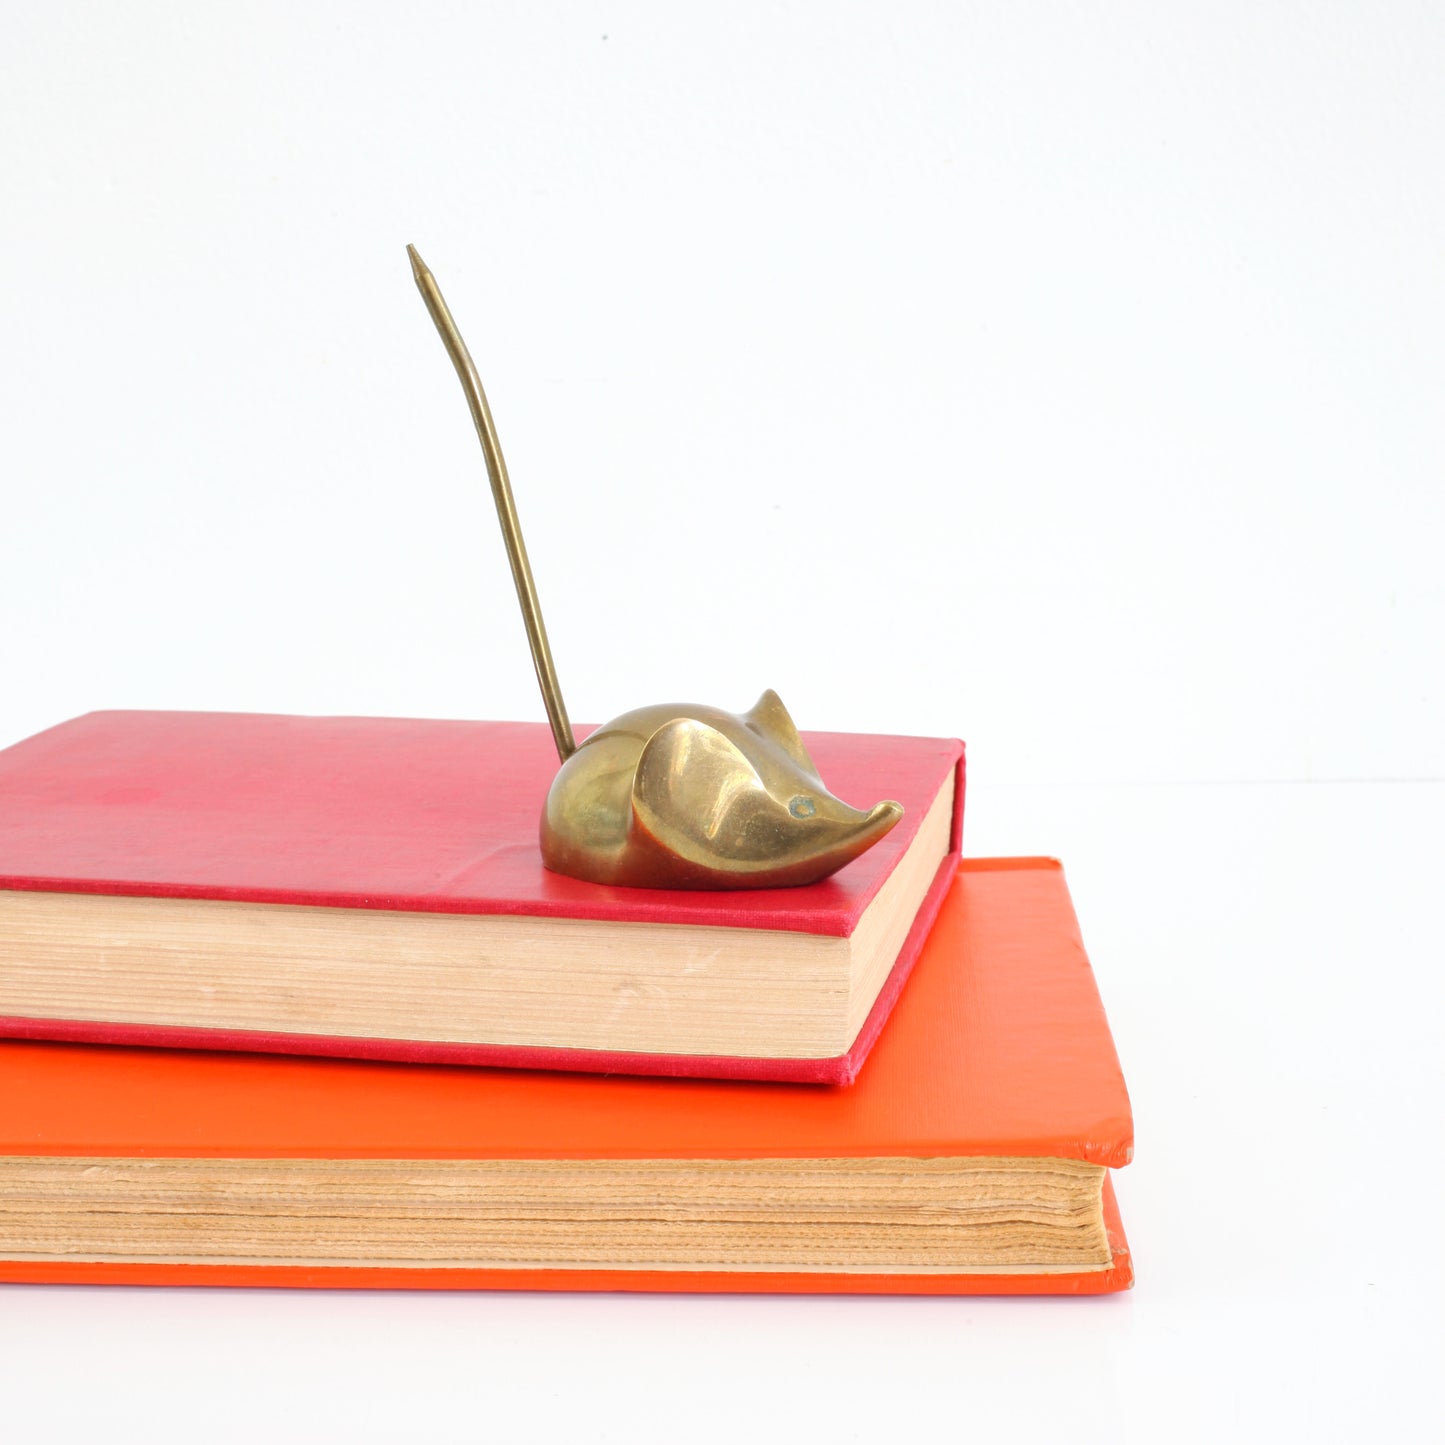 SOLD - Vintage Brass Mouse Figurine